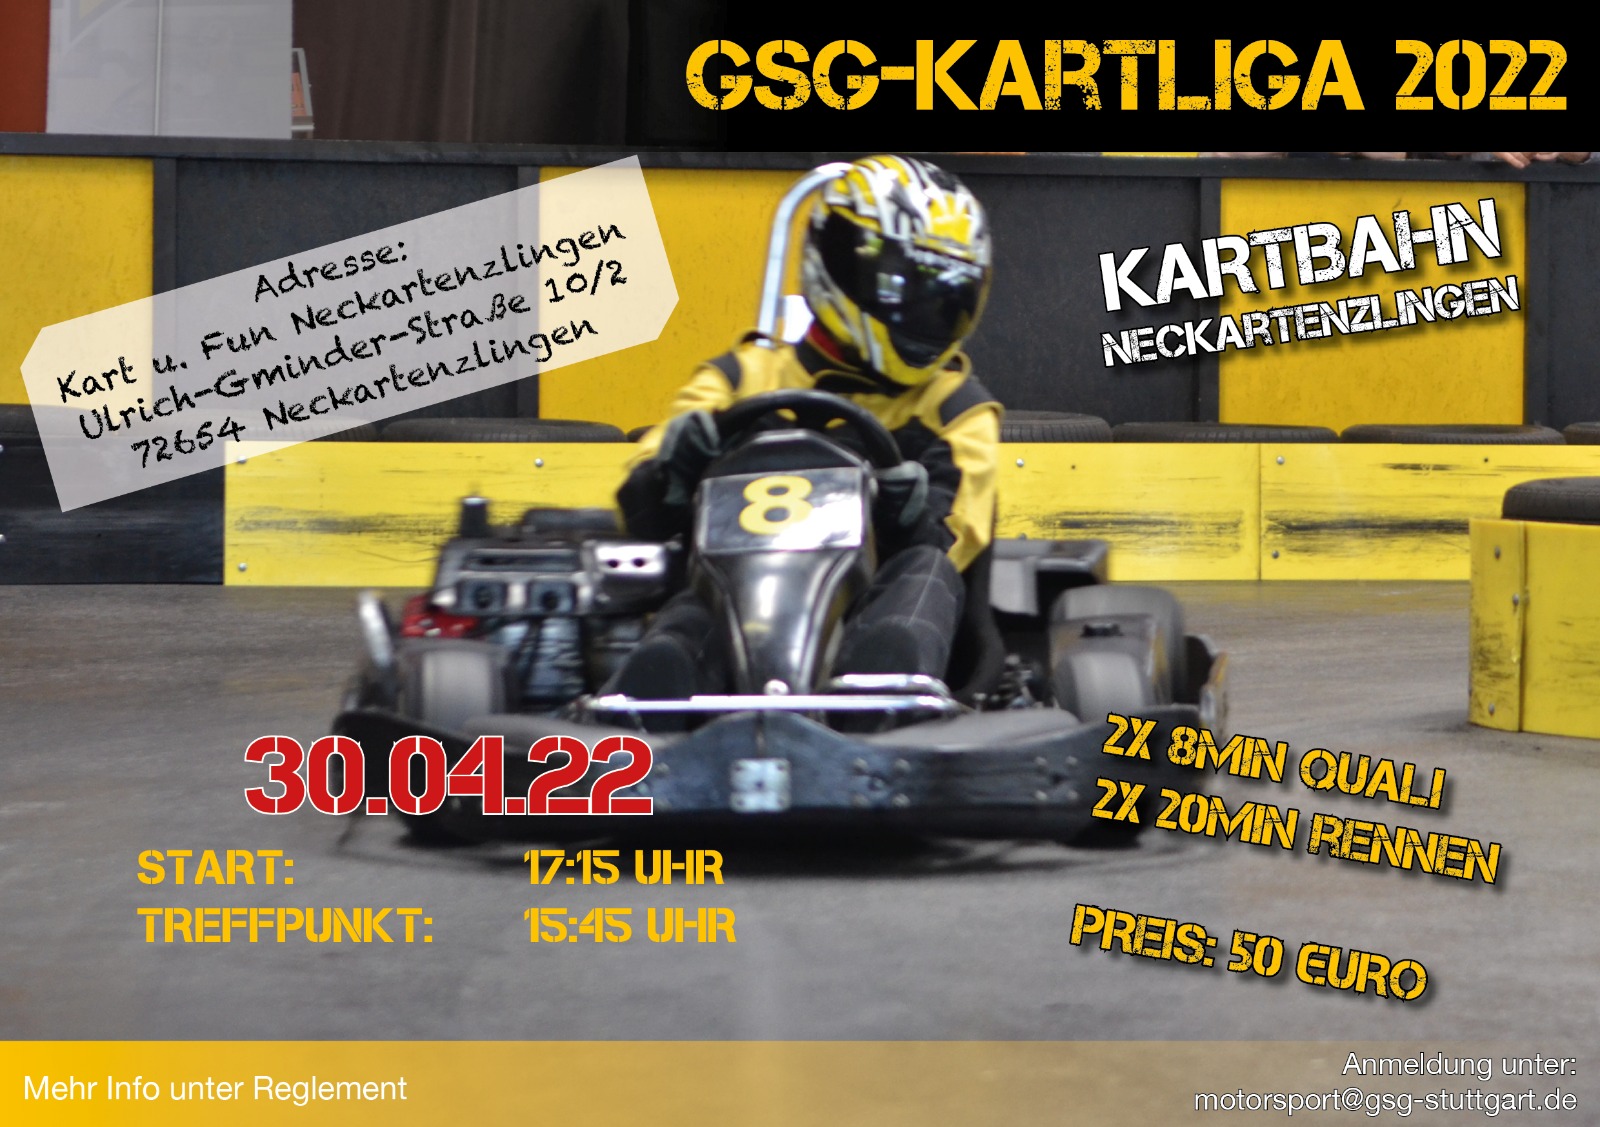 You are currently viewing Kartliga 2022 2. Rennen in Neckartenzlingen